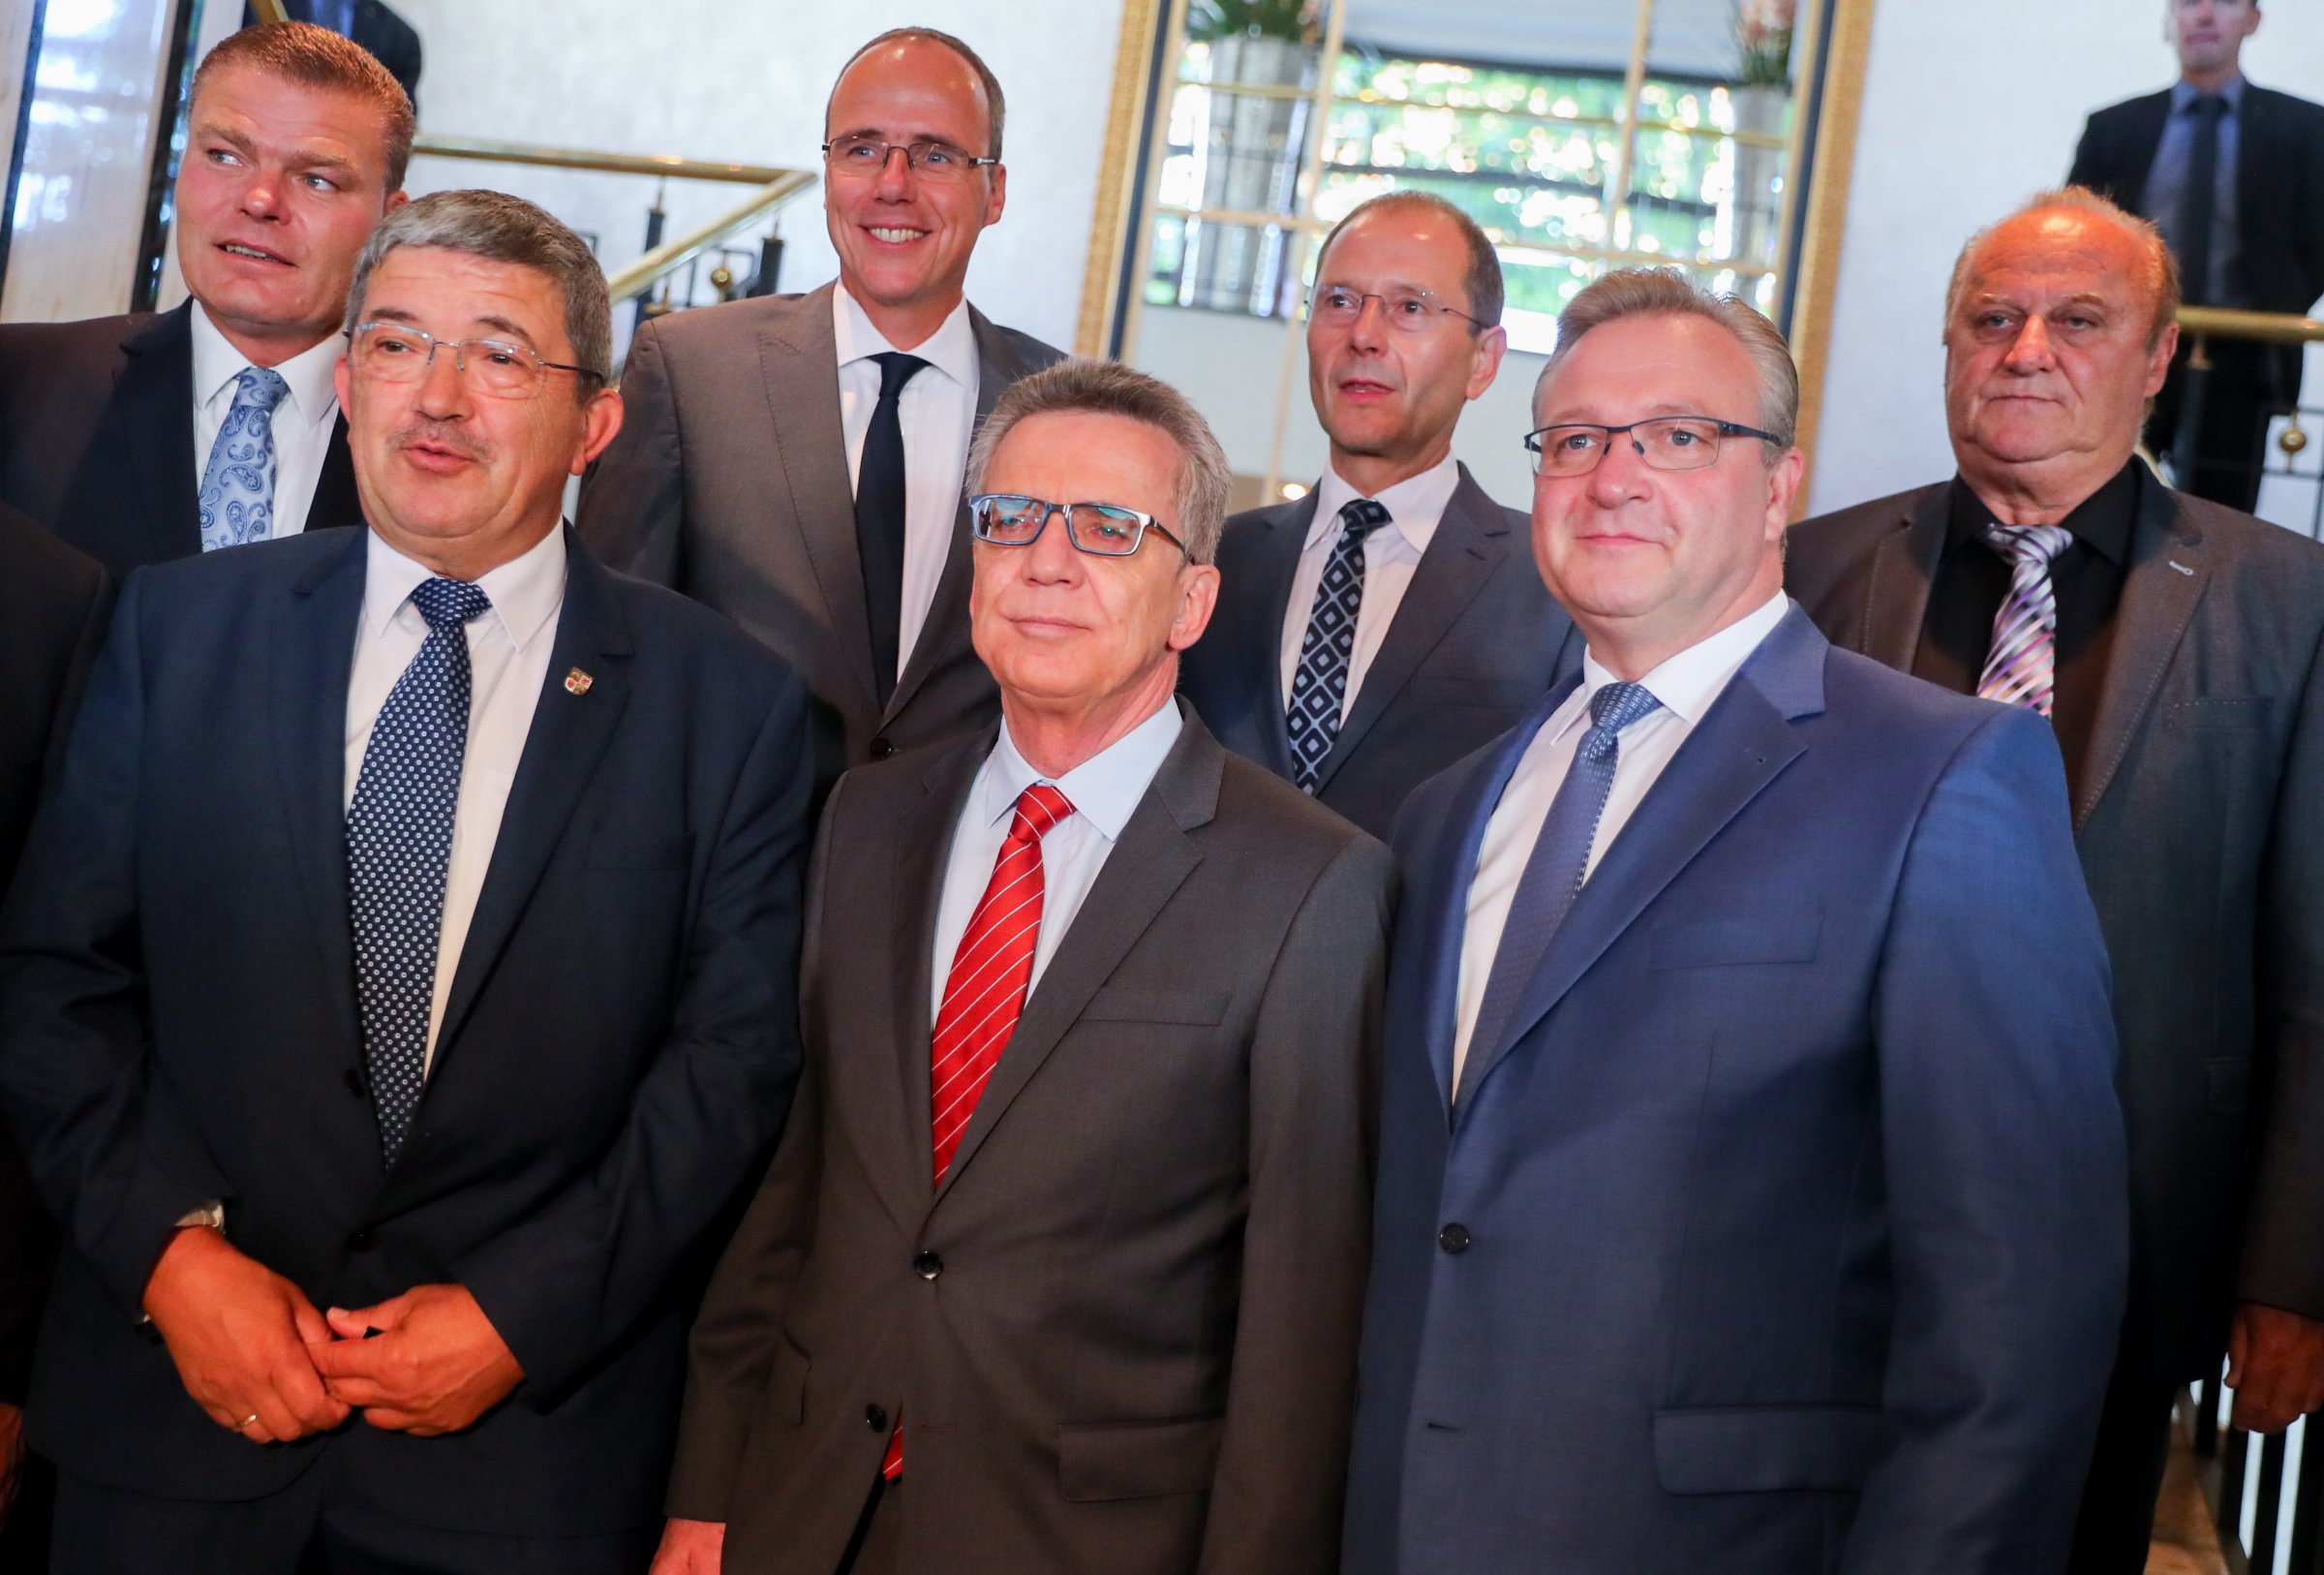 CDU/CSU interior ministers conference